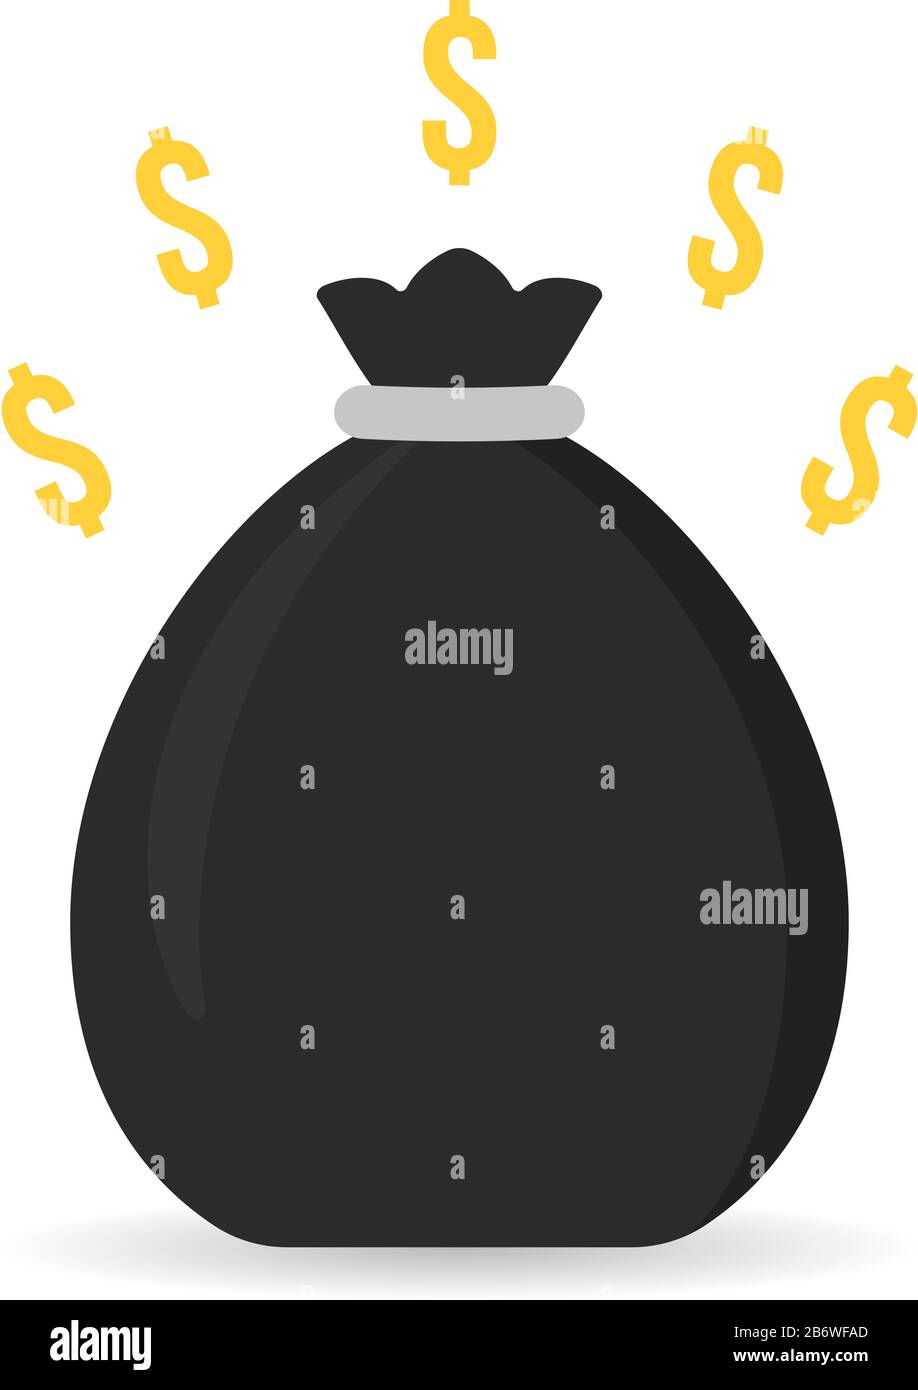 black money bag icon with shadow Stock Vector